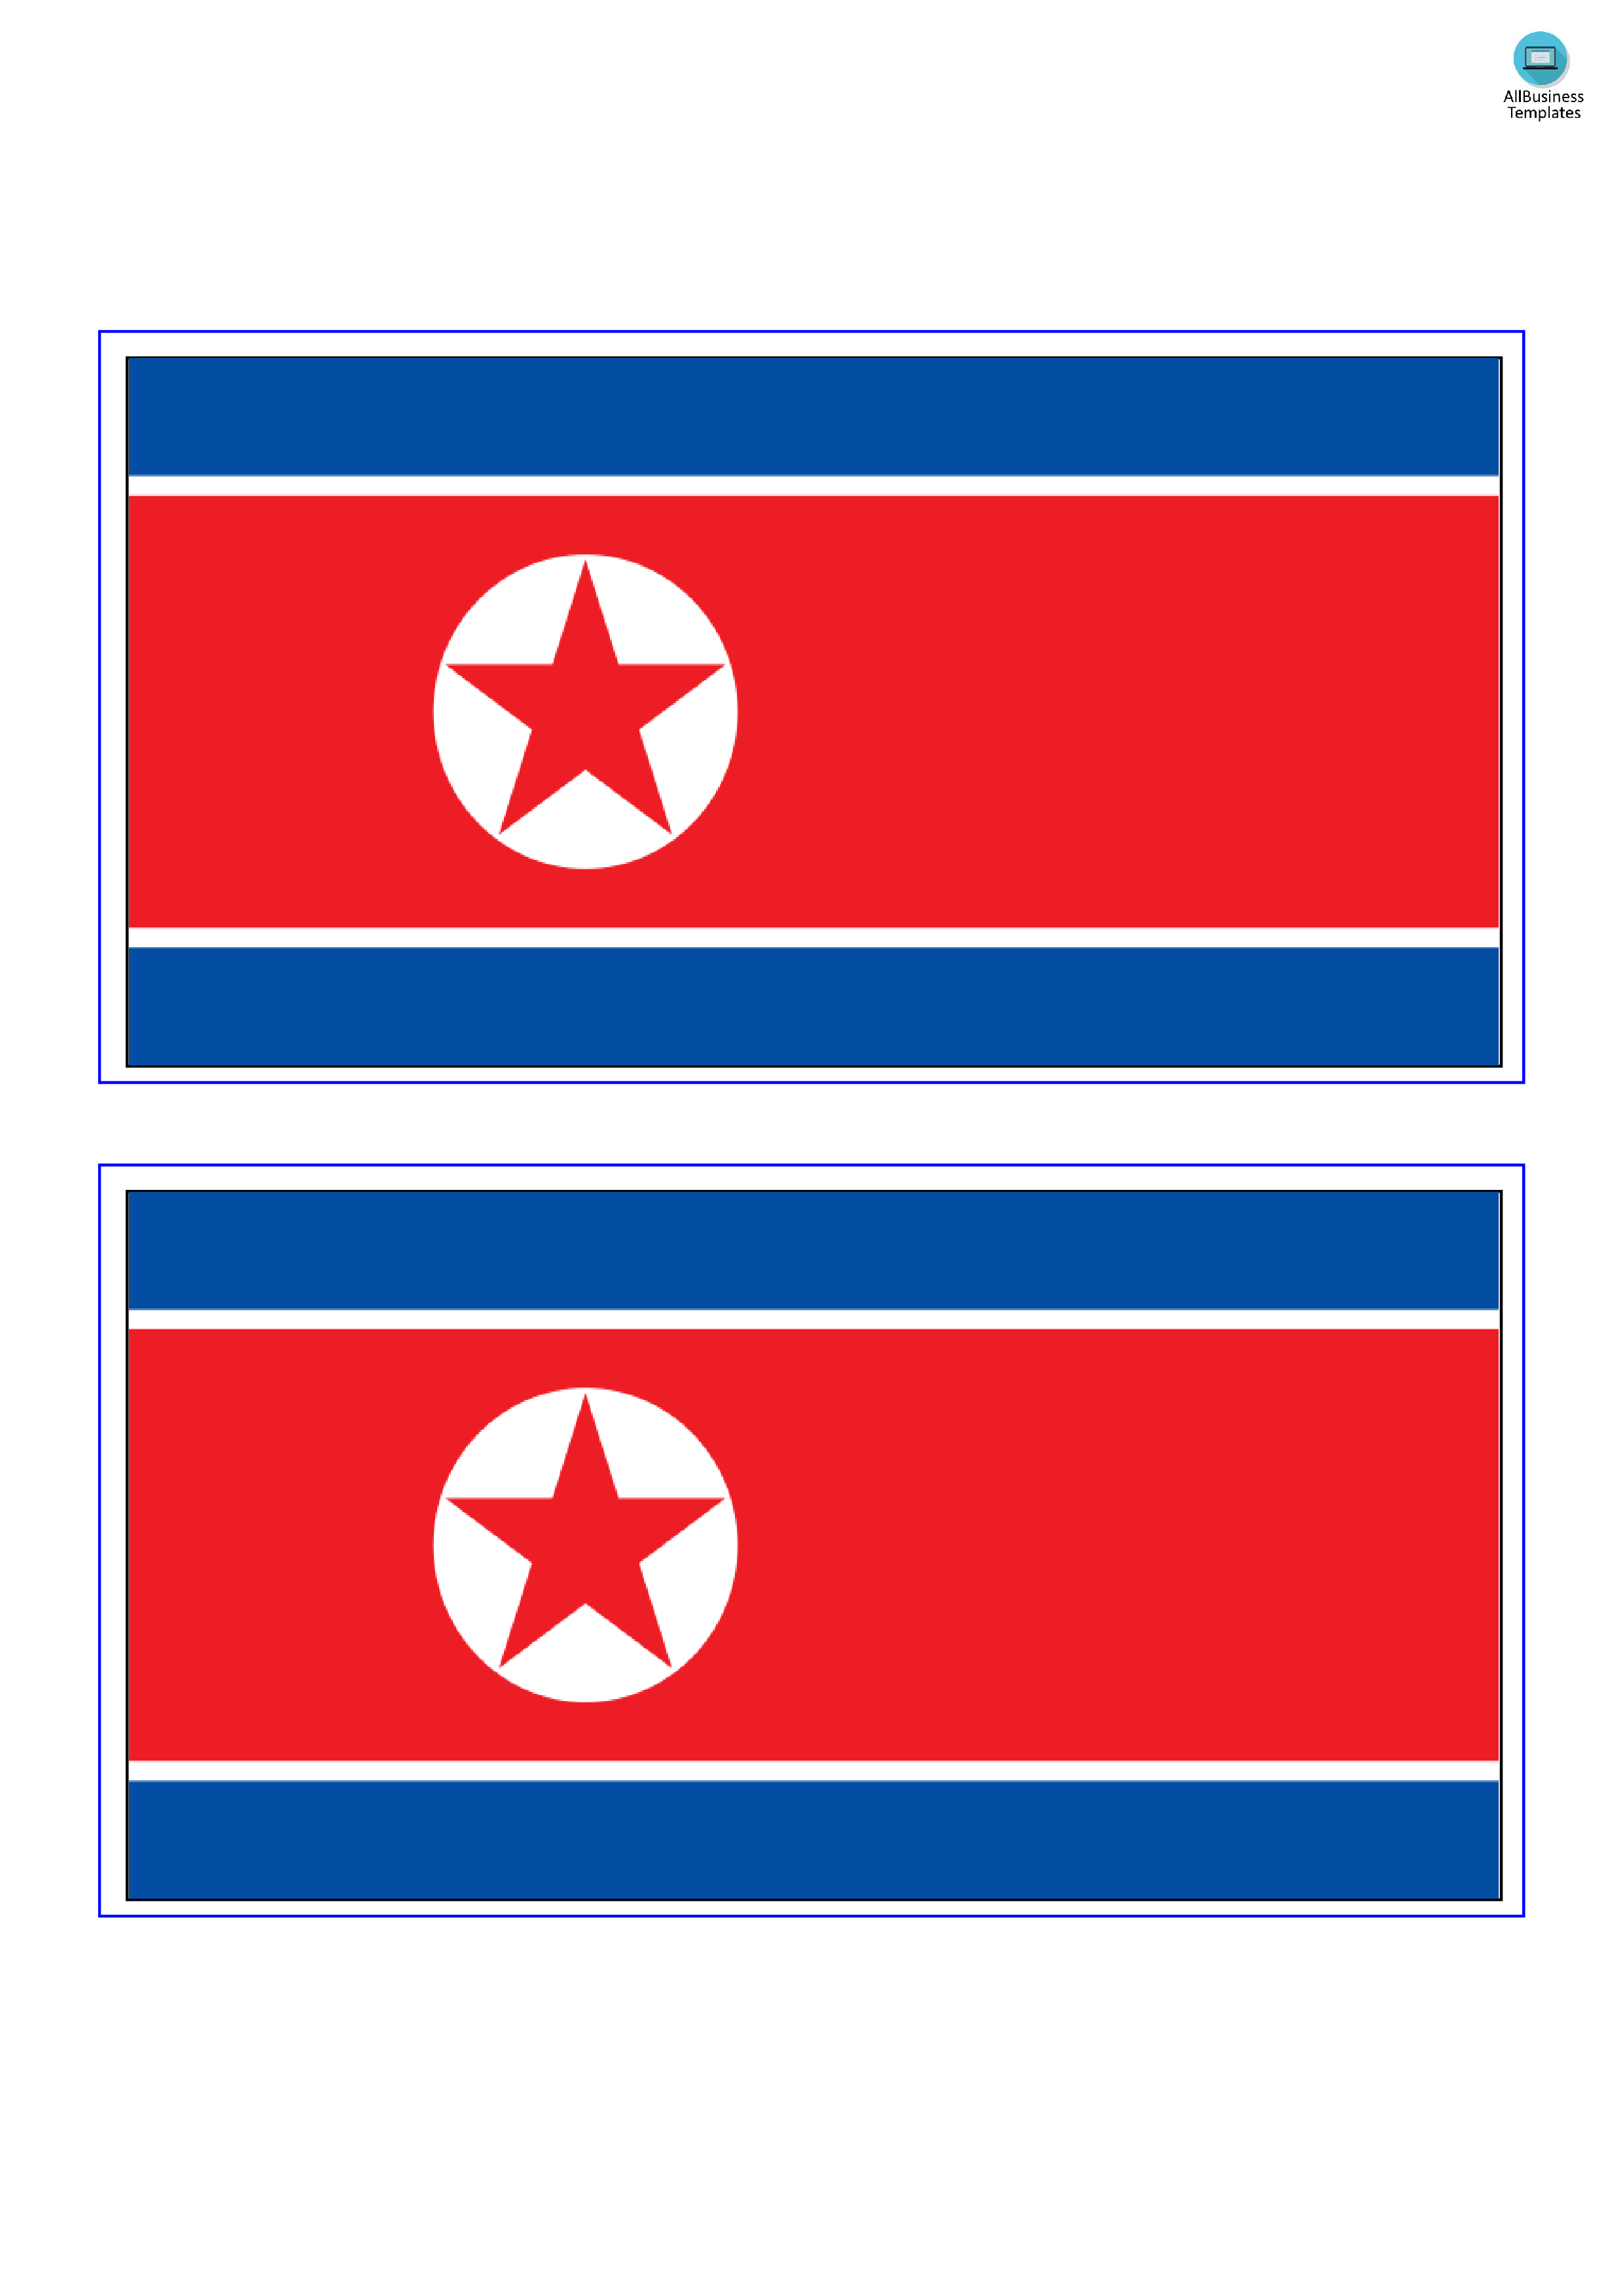 North Korea Flag main image